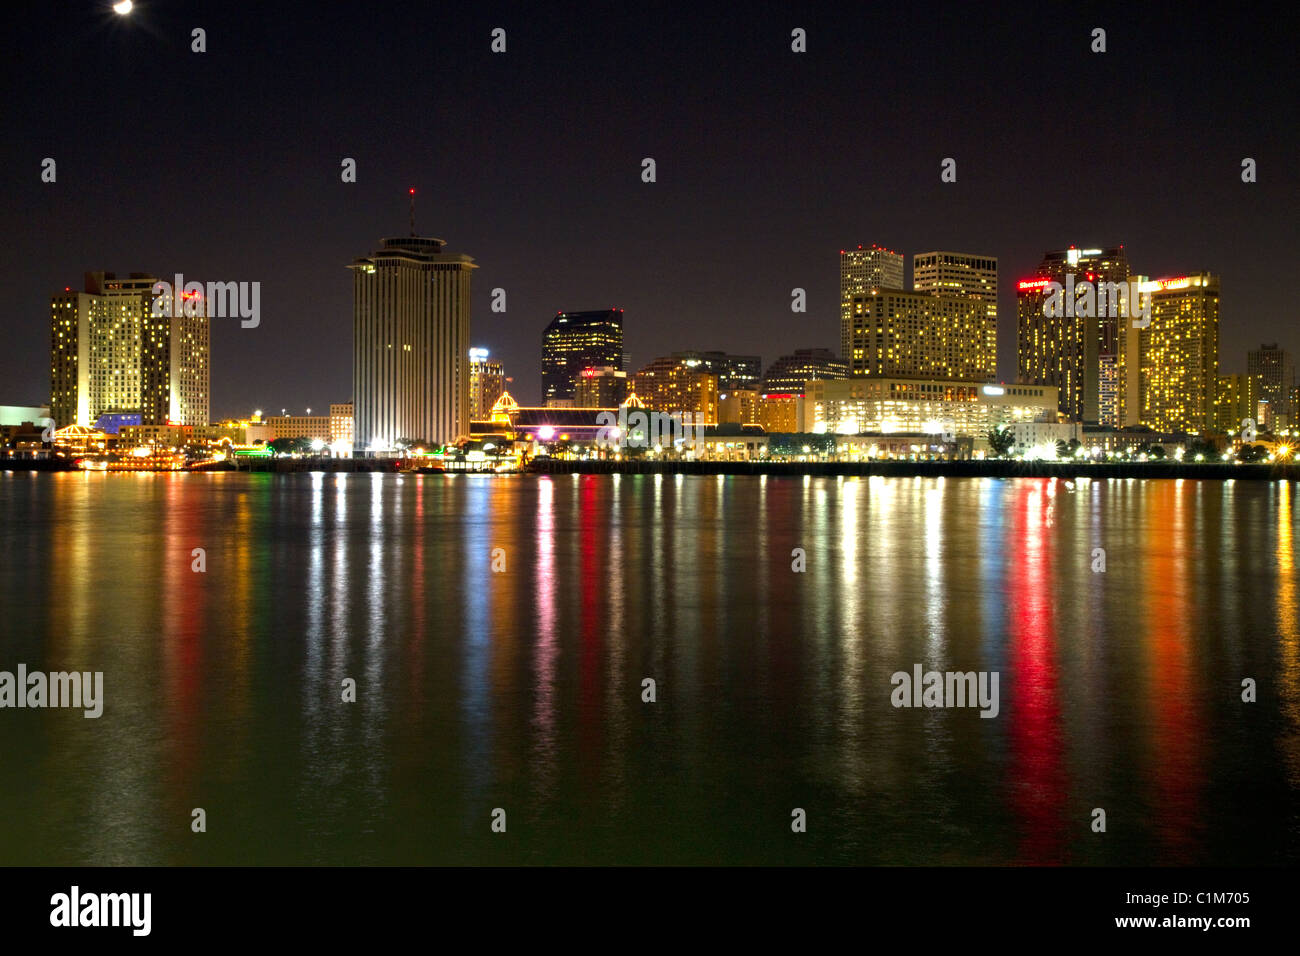 Nacht-Skyline der Stadt New Orleans entlang dem Mississippi Fluß, Louisiana, USA. Stockfoto